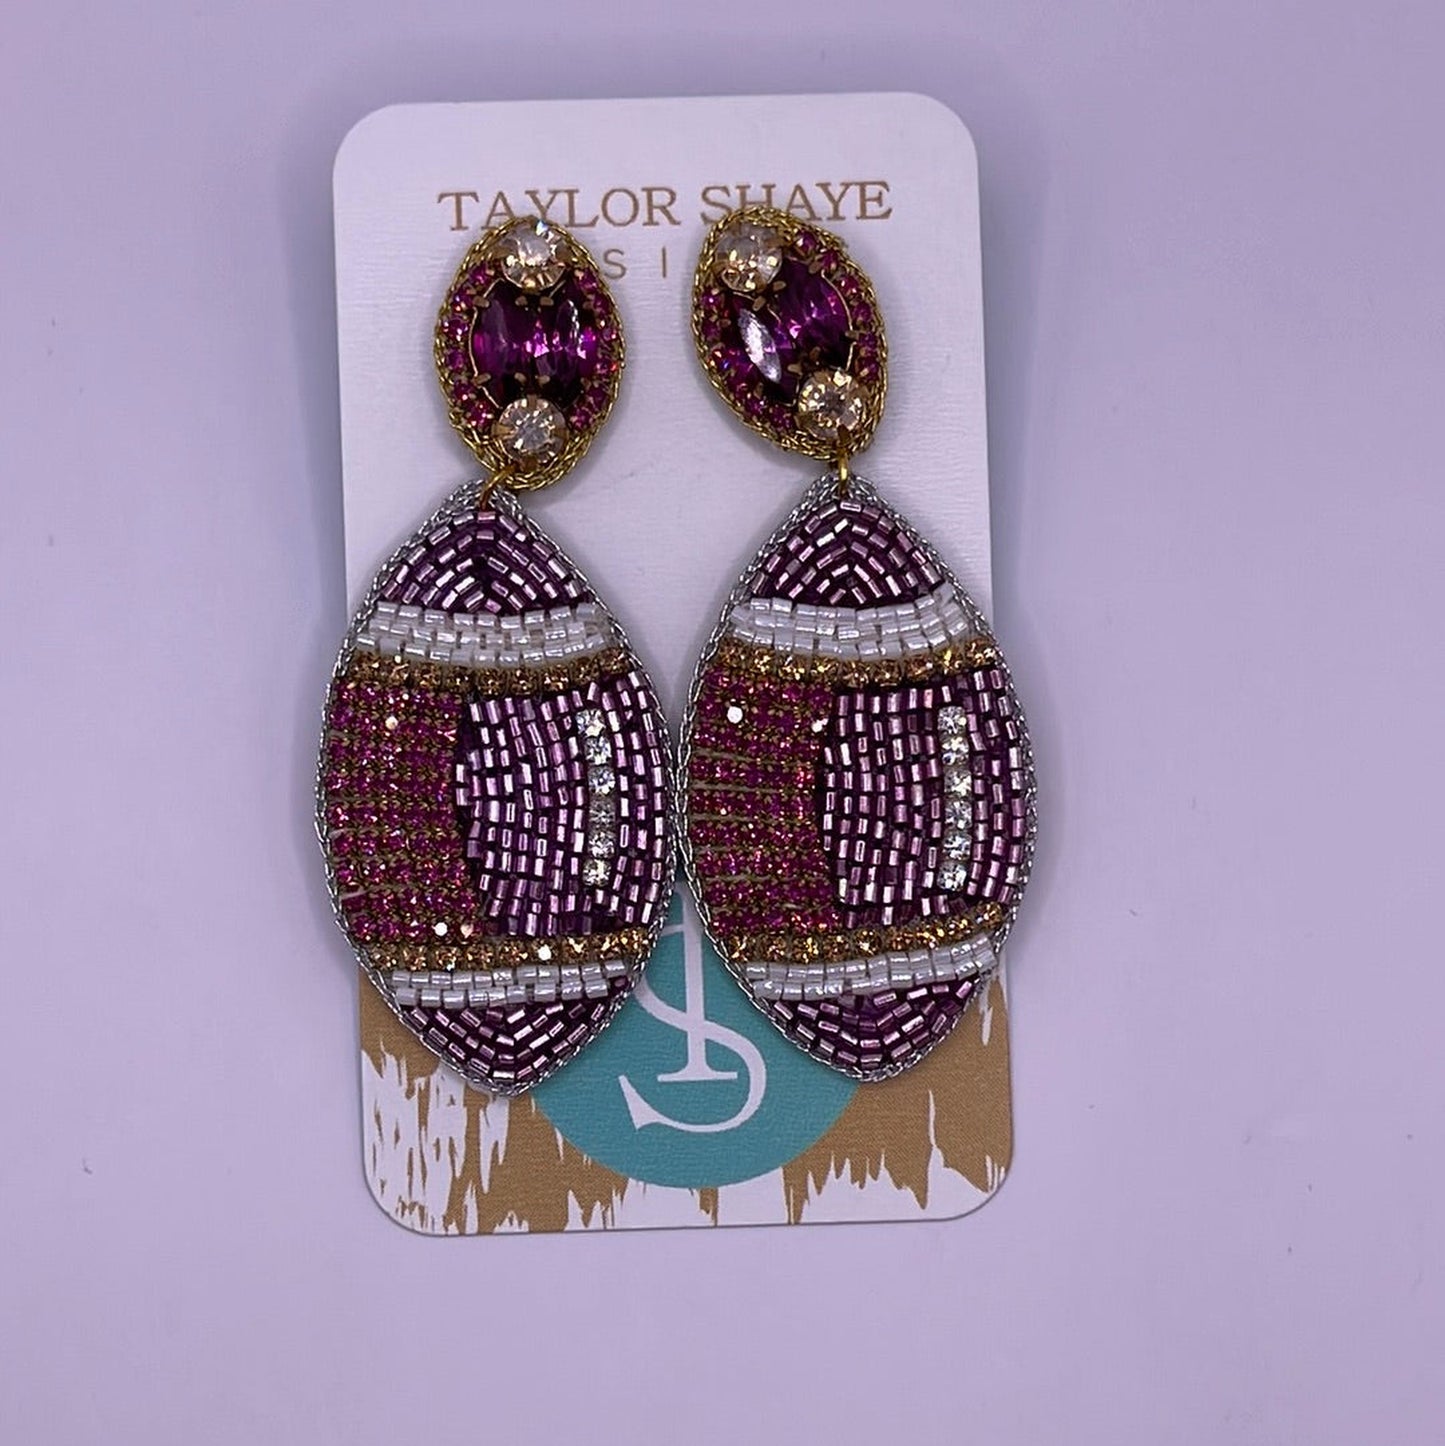 Taylor Shaye Beaded Football Earrings, purple